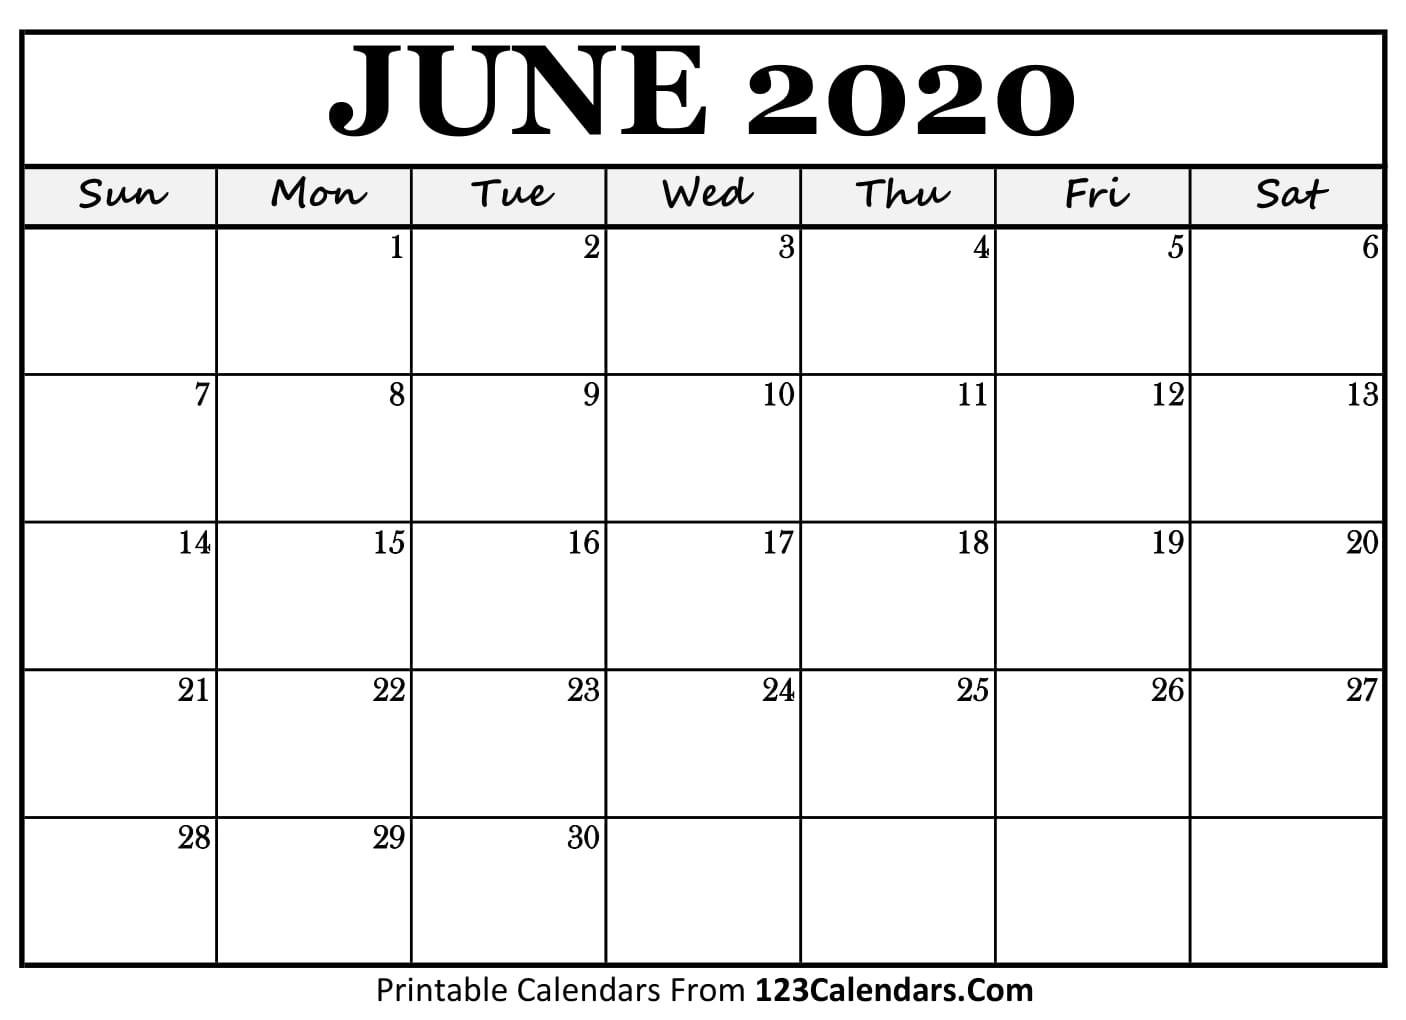 June 2020 Printable Calendar | 123Calendars-Blank Customizable June Calendar Template 2020